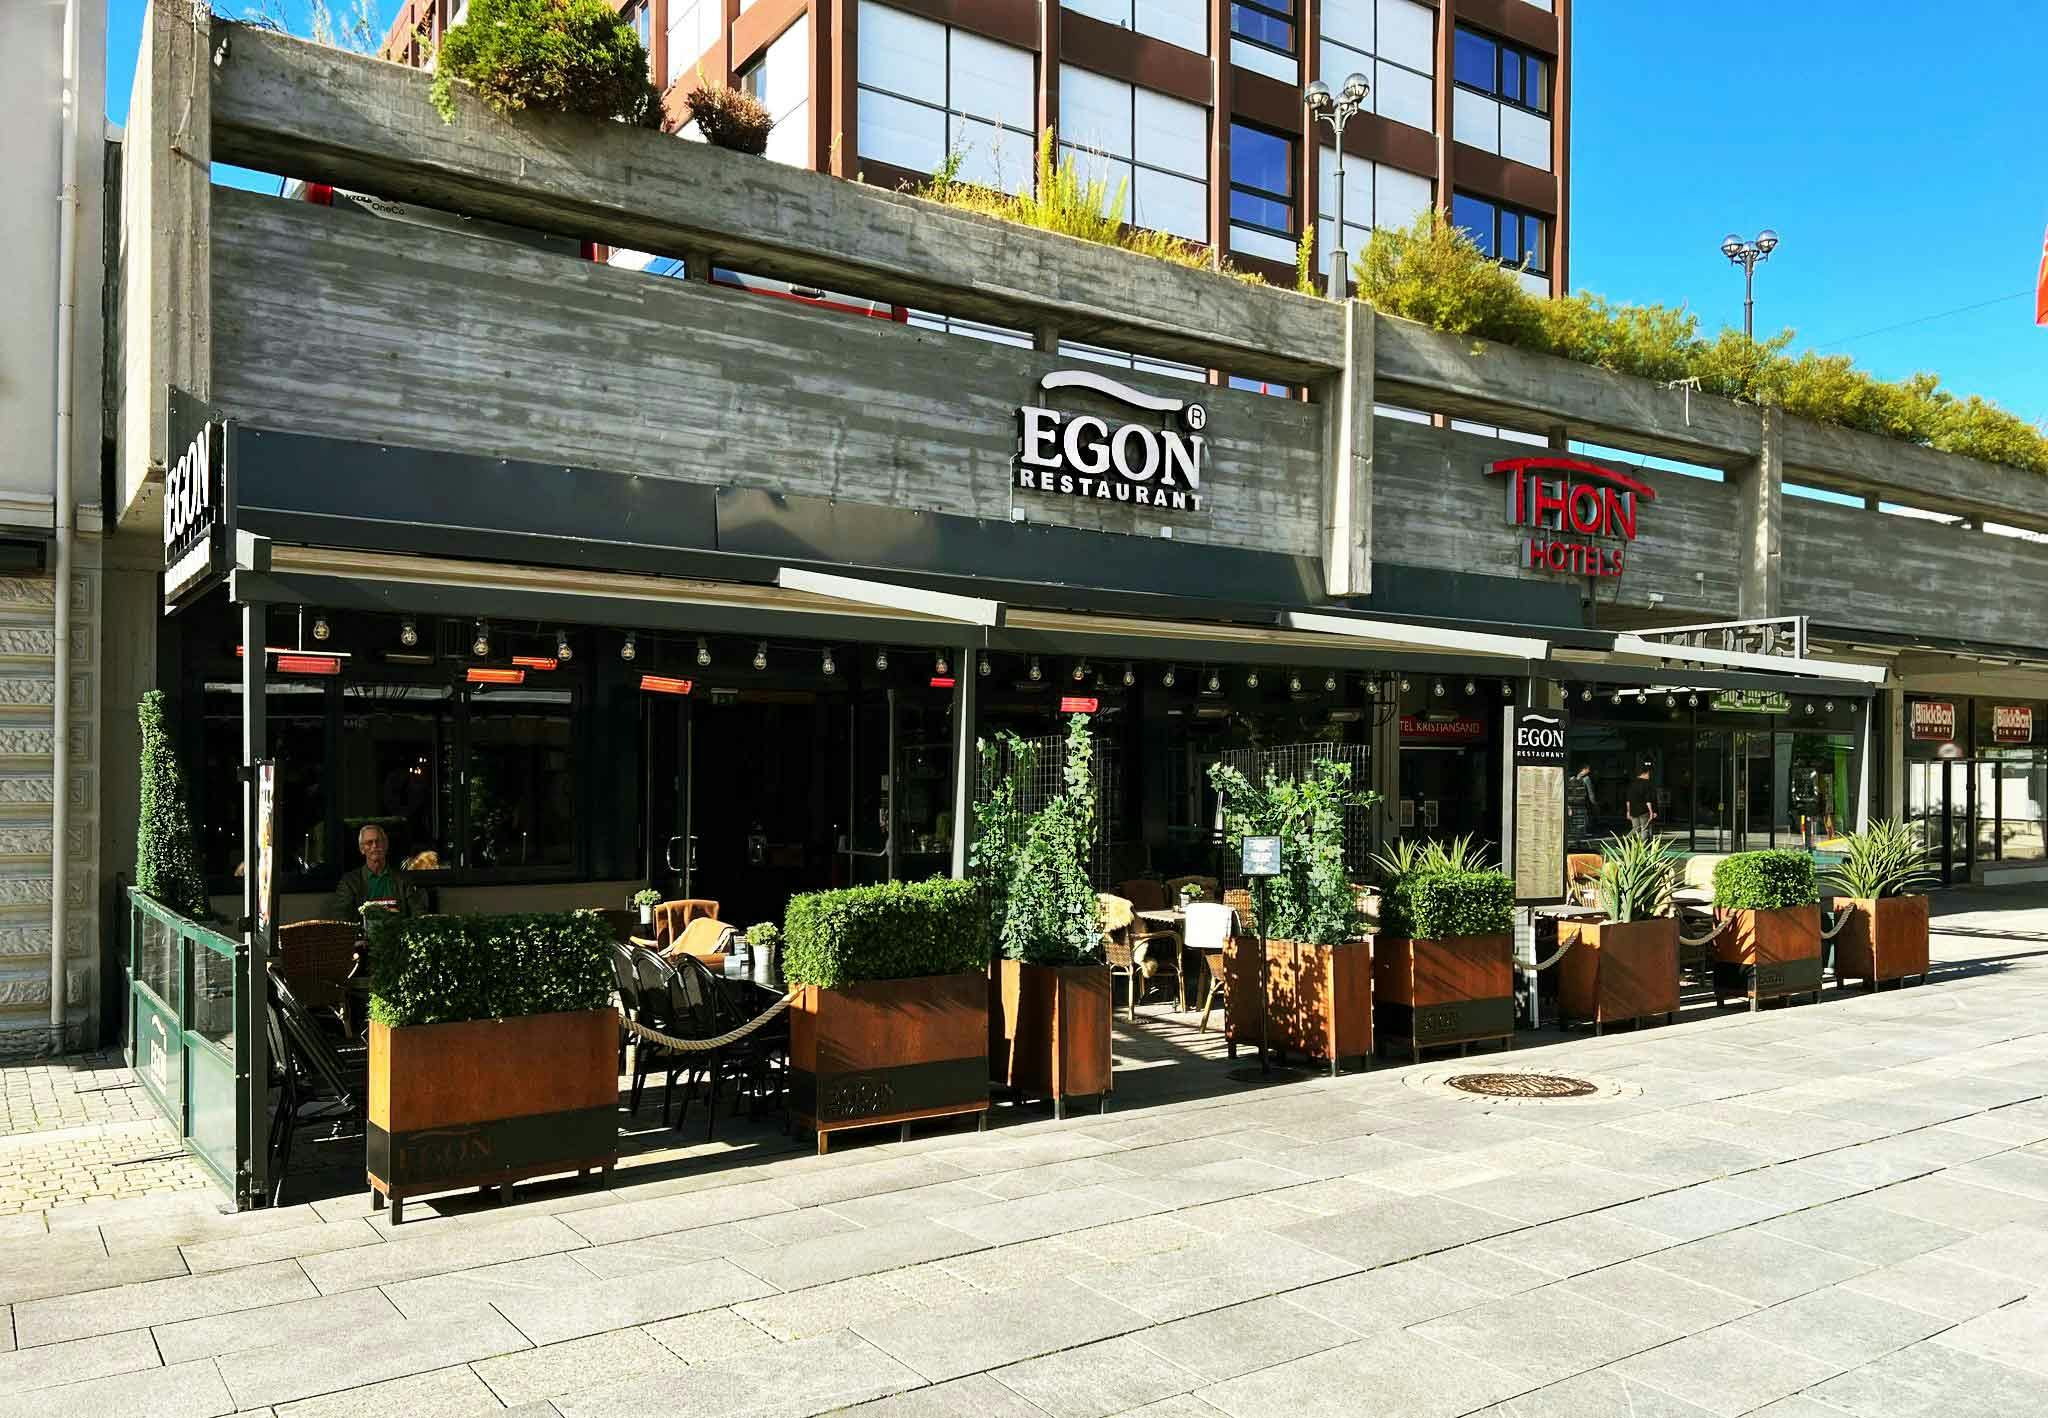 Breakfast deal at Egon